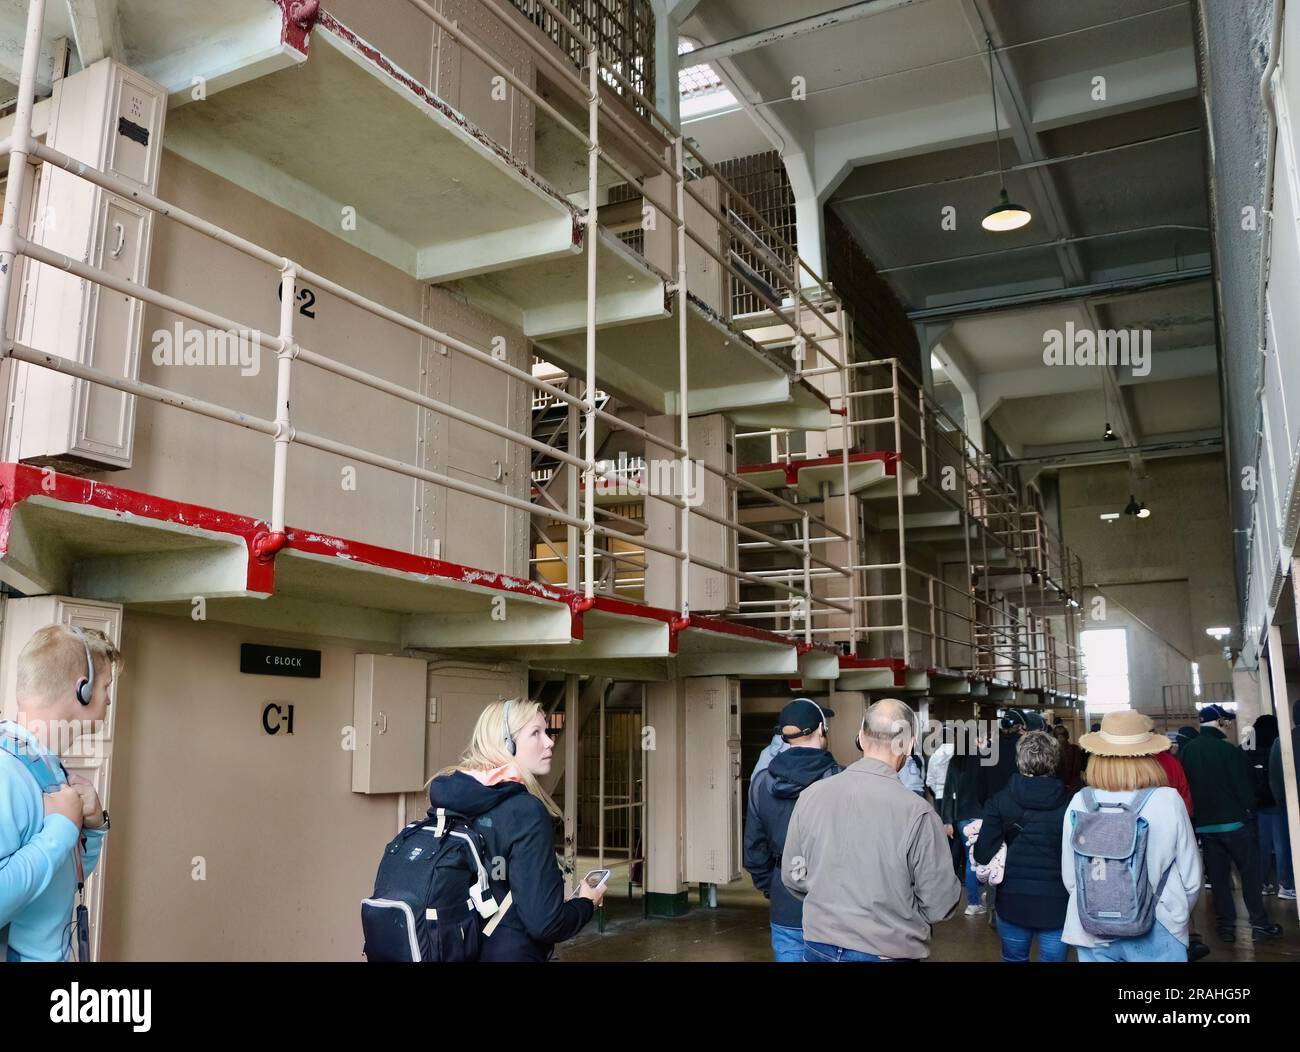 Tourists inside Alcatraz Federal penitentiary looking up at corridors with prison cells Alcatraz Island San Francisco California USA Stock Photo